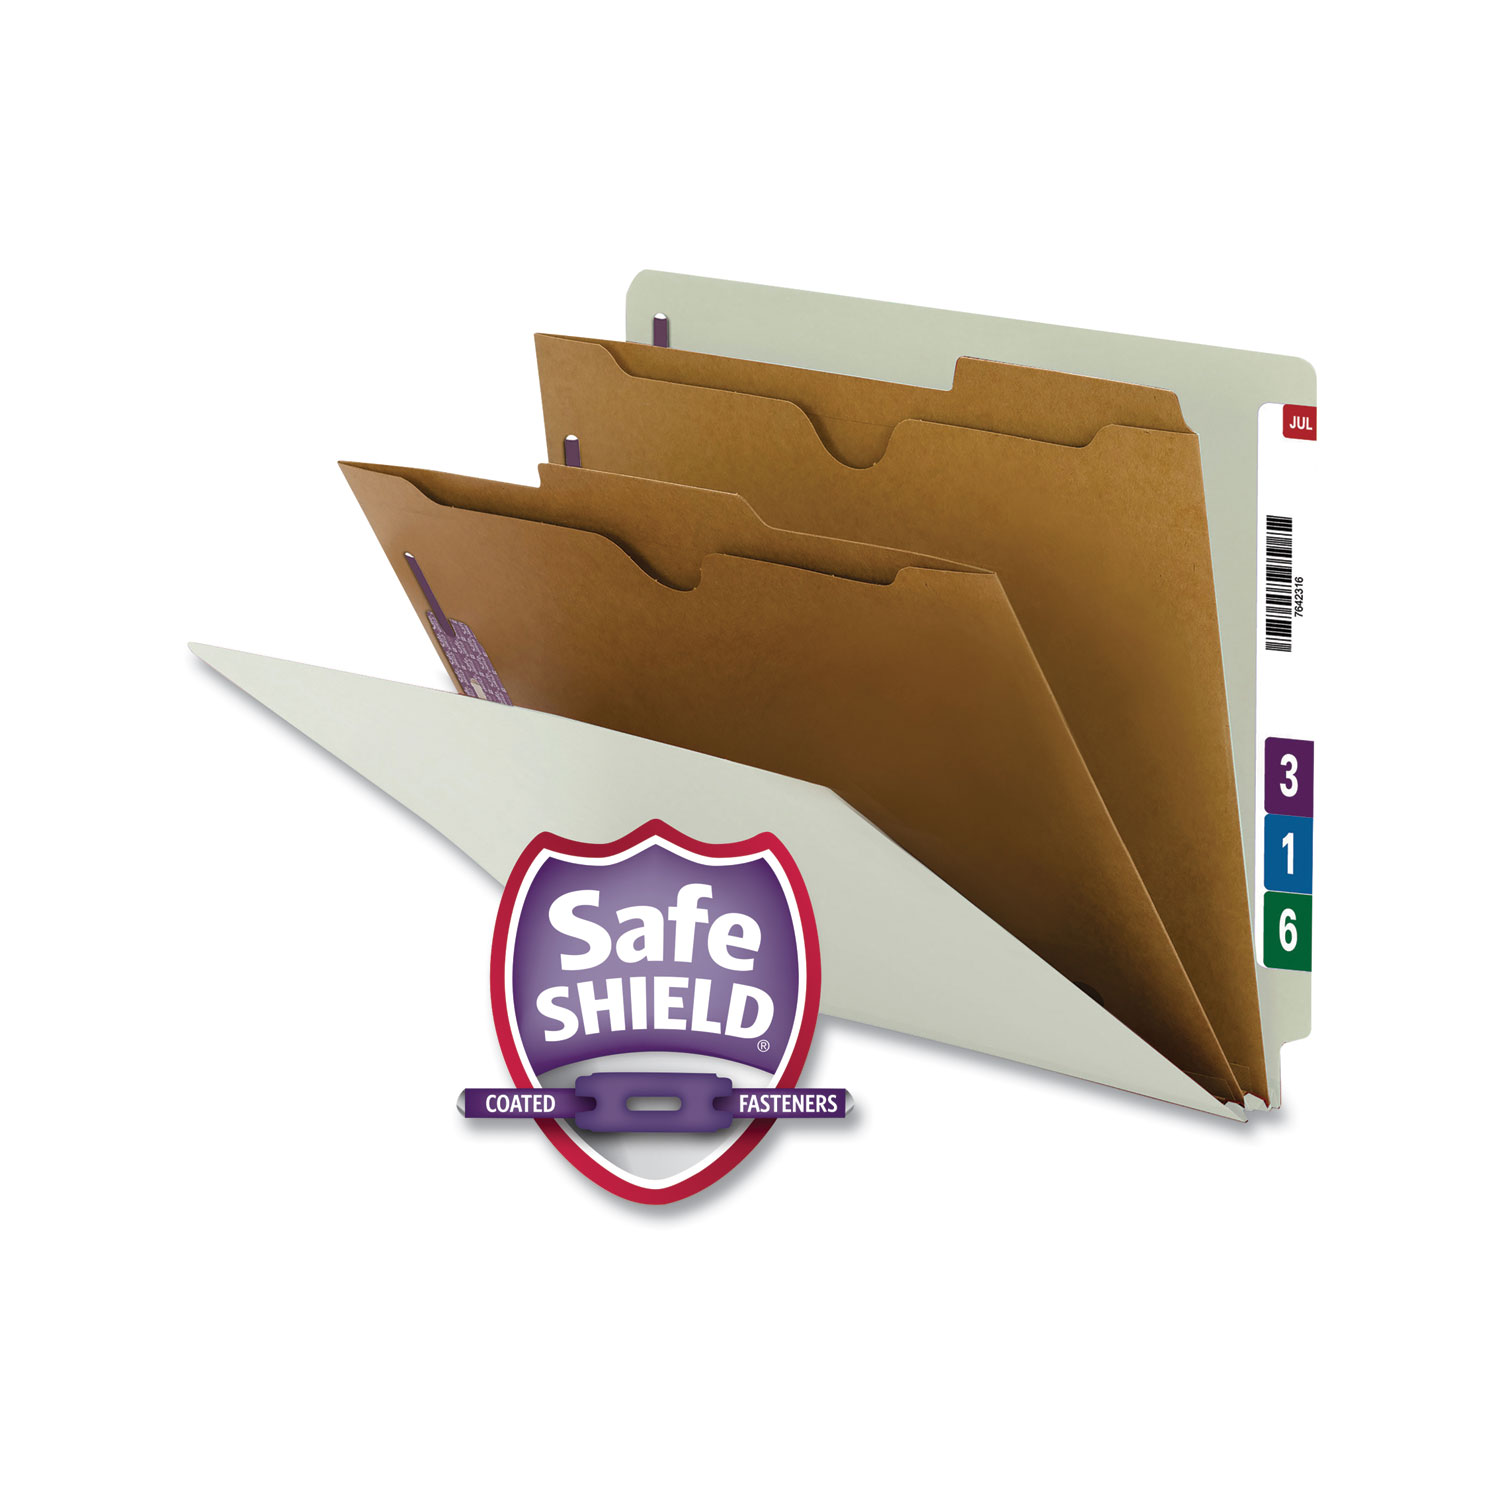  Smead 26710 X-Heavy End Tab Pressboard Classification Folders w/SafeSHIELD Fasteners, 2-Pocket Dividers, Letter Size, Gray-Green, 10/Box (SMD26710) 